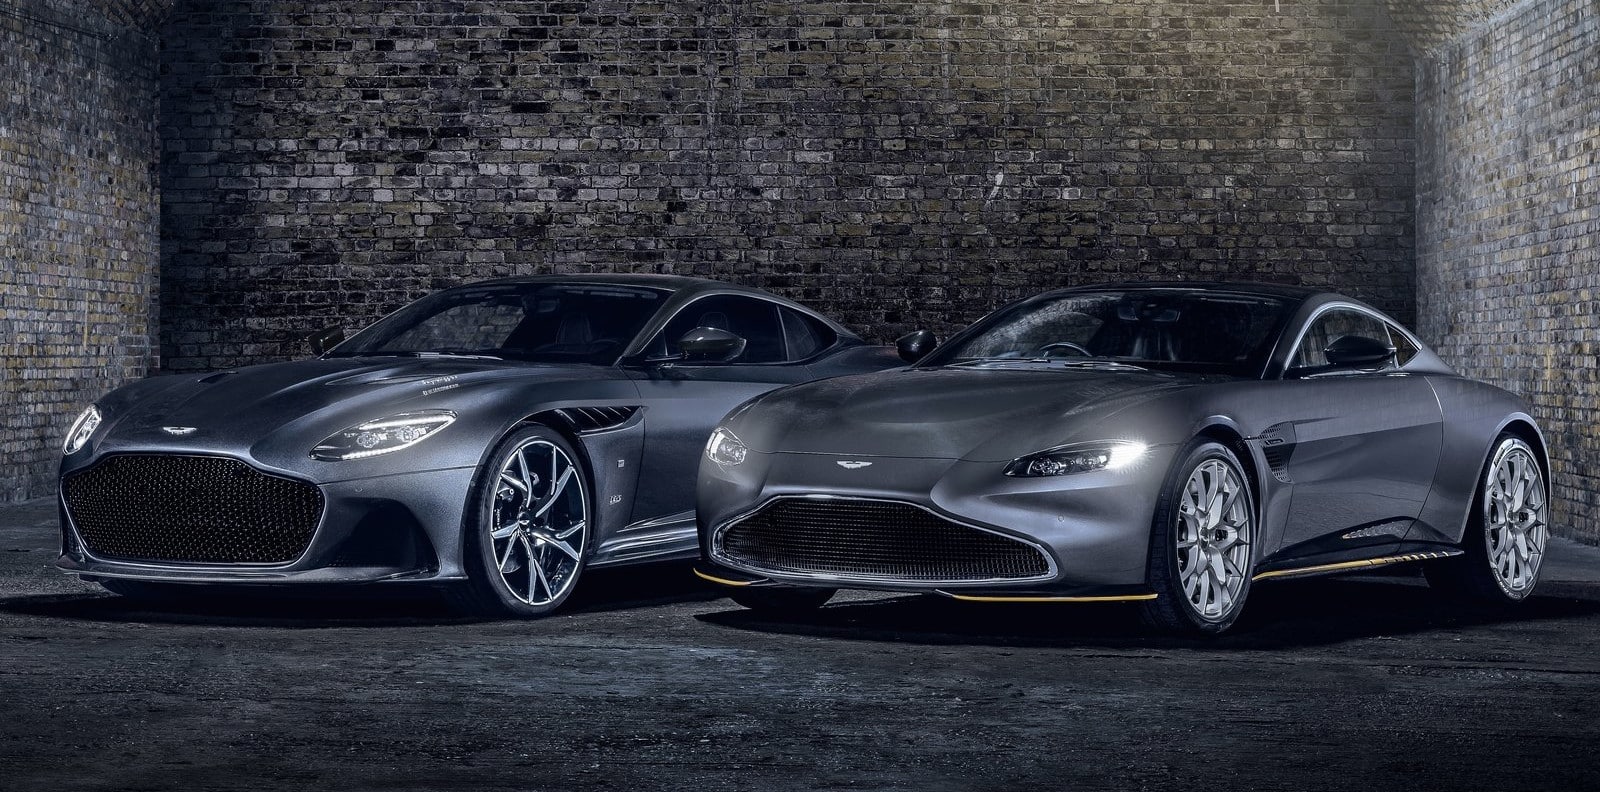 Aston Martin Vantage y DBS Superleggera 007 Edition, con estilo James Bond